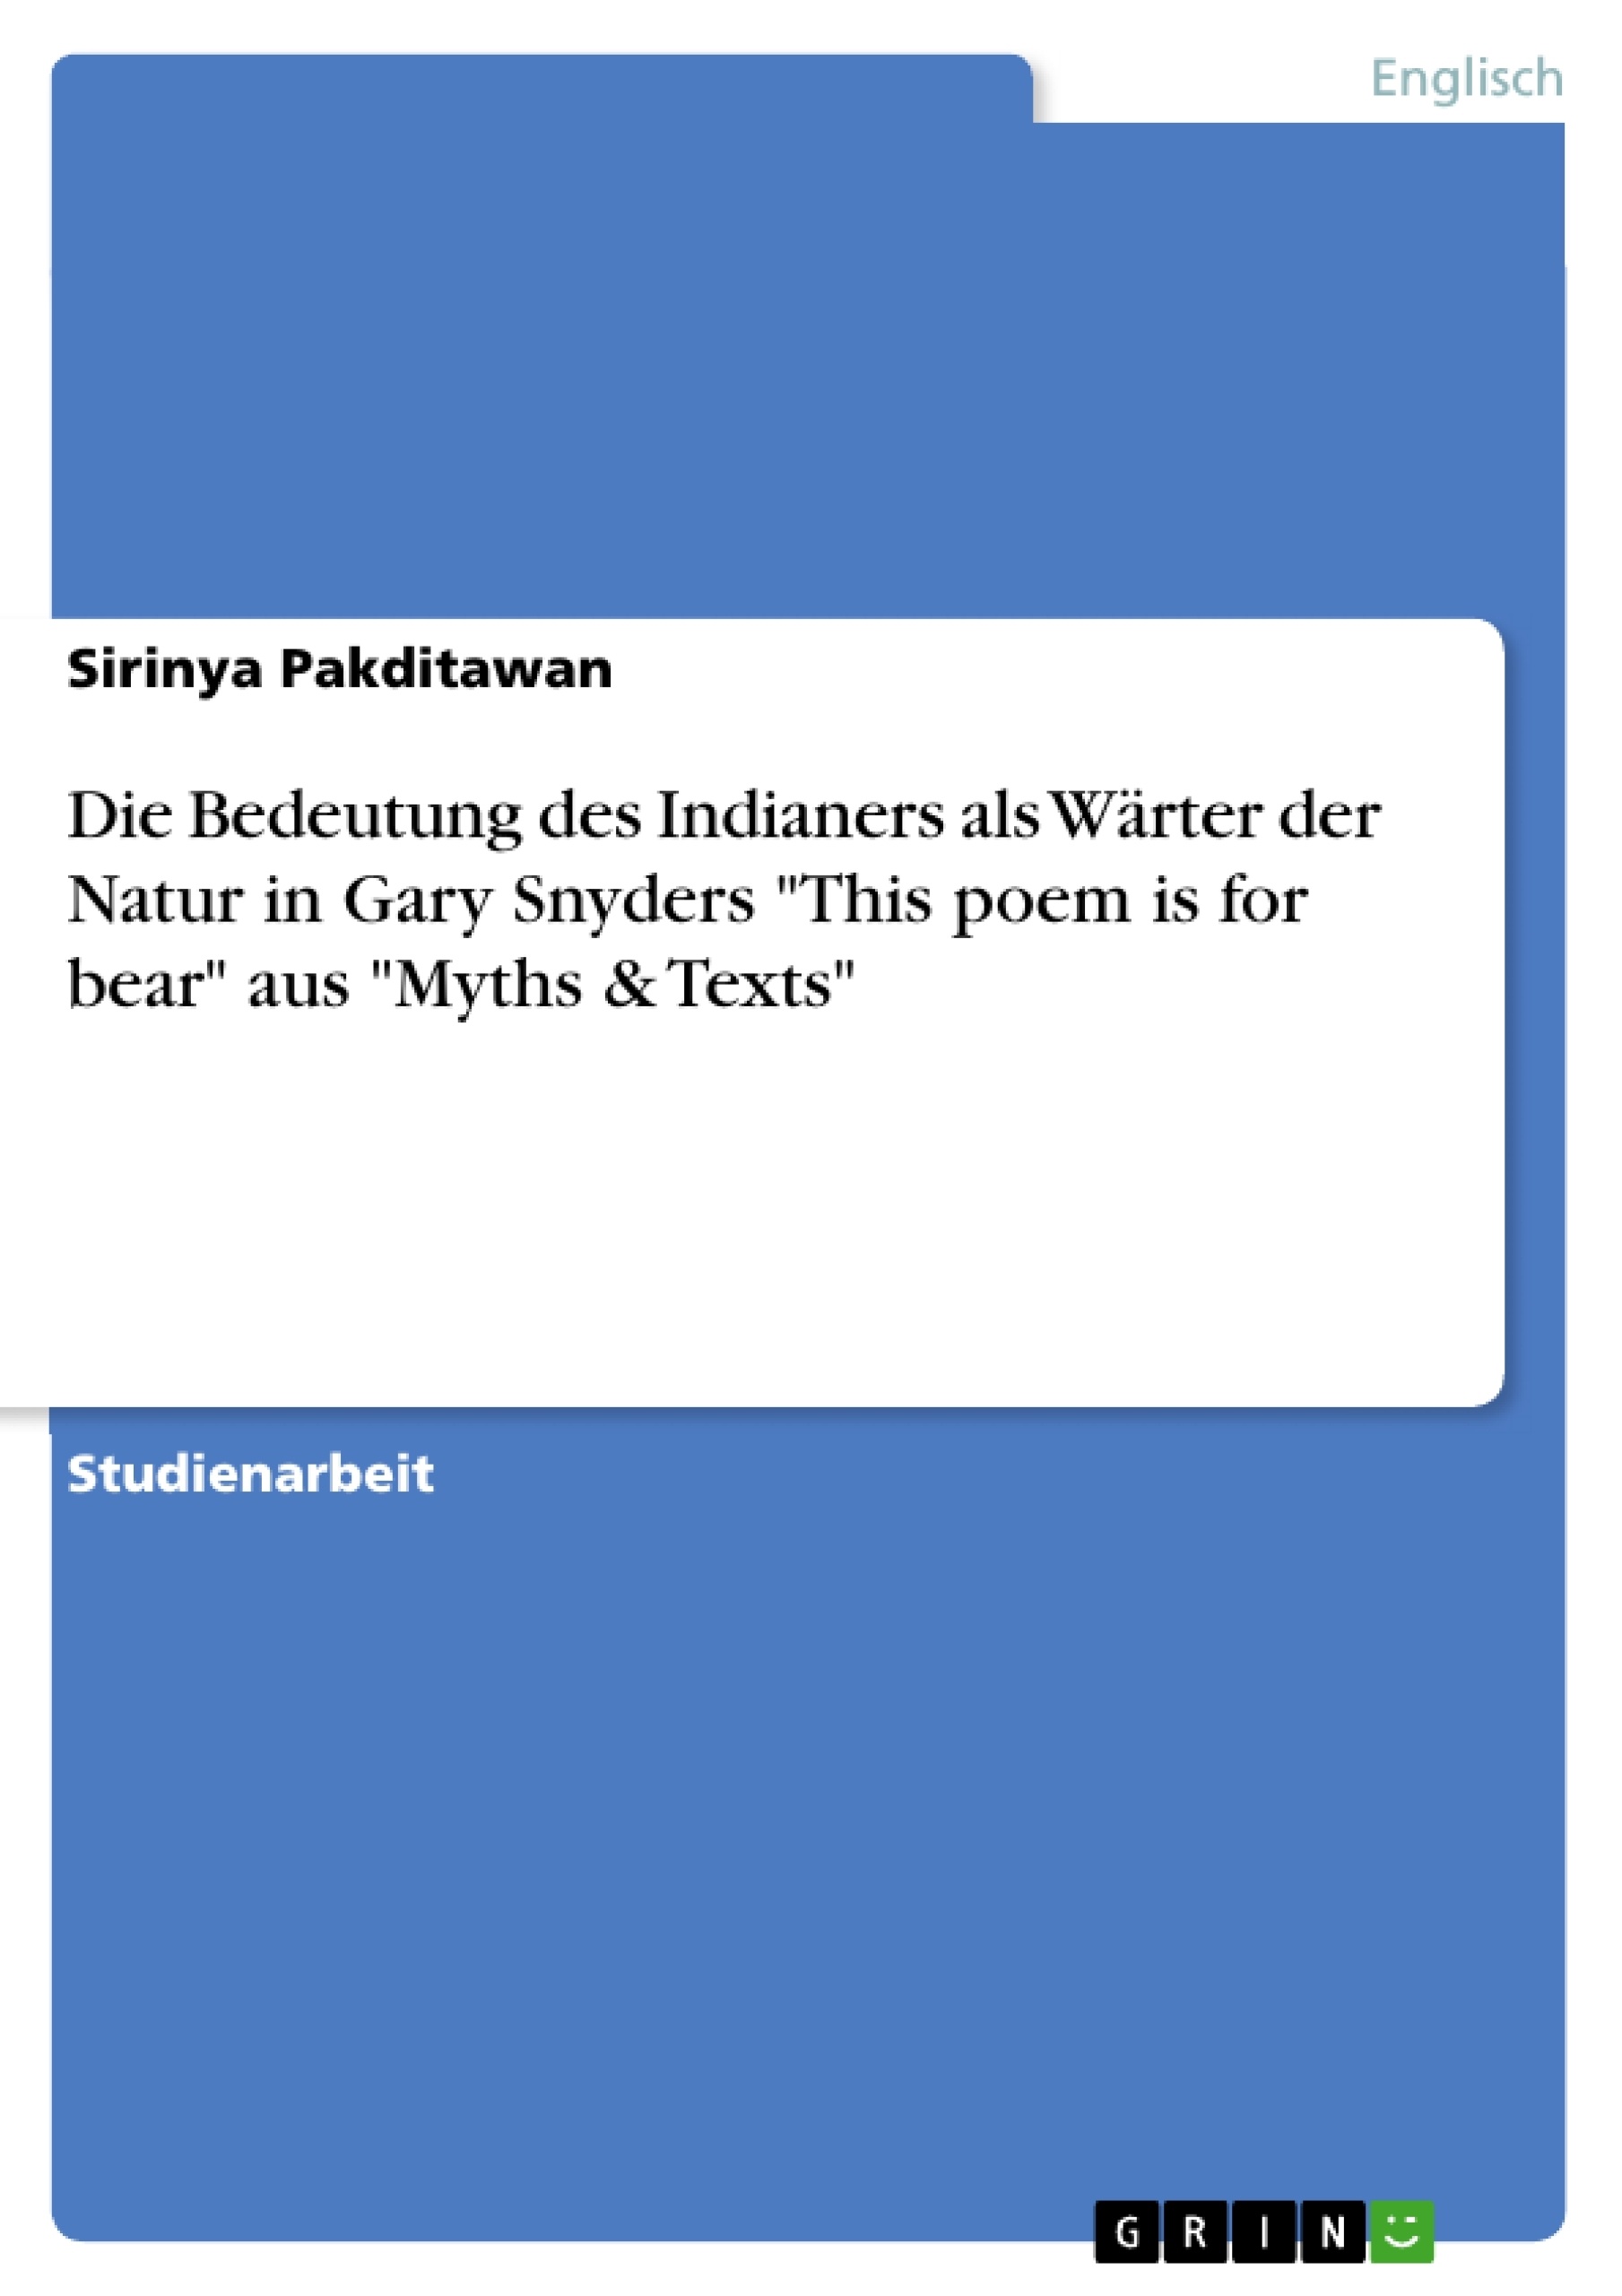 Título: Die Bedeutung des Indianers als Wärter der Natur in Gary Snyders "This poem is for bear" aus "Myths & Texts"